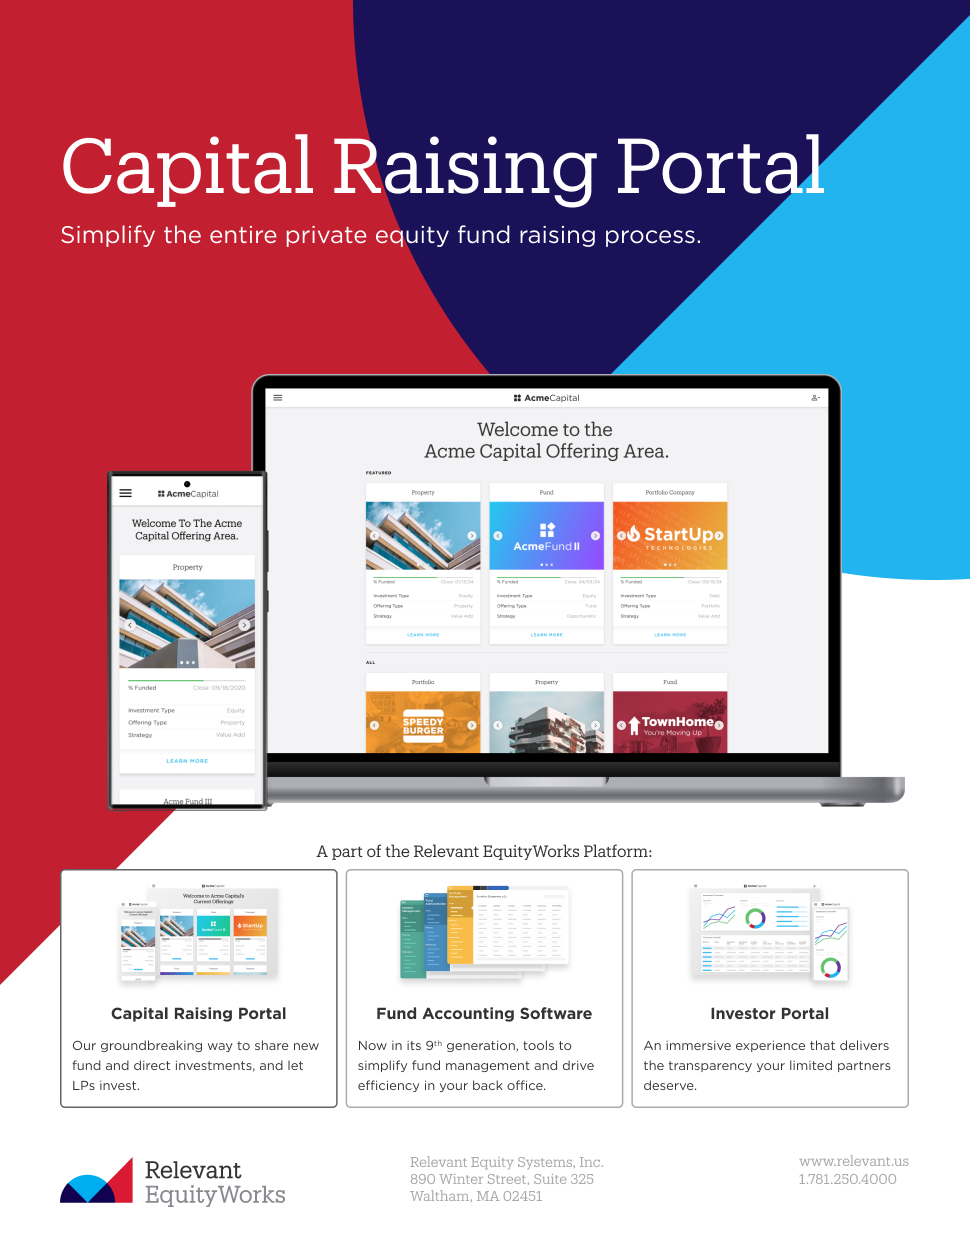 Relevant EquityWorks - Capital Raising Portal fact sheet